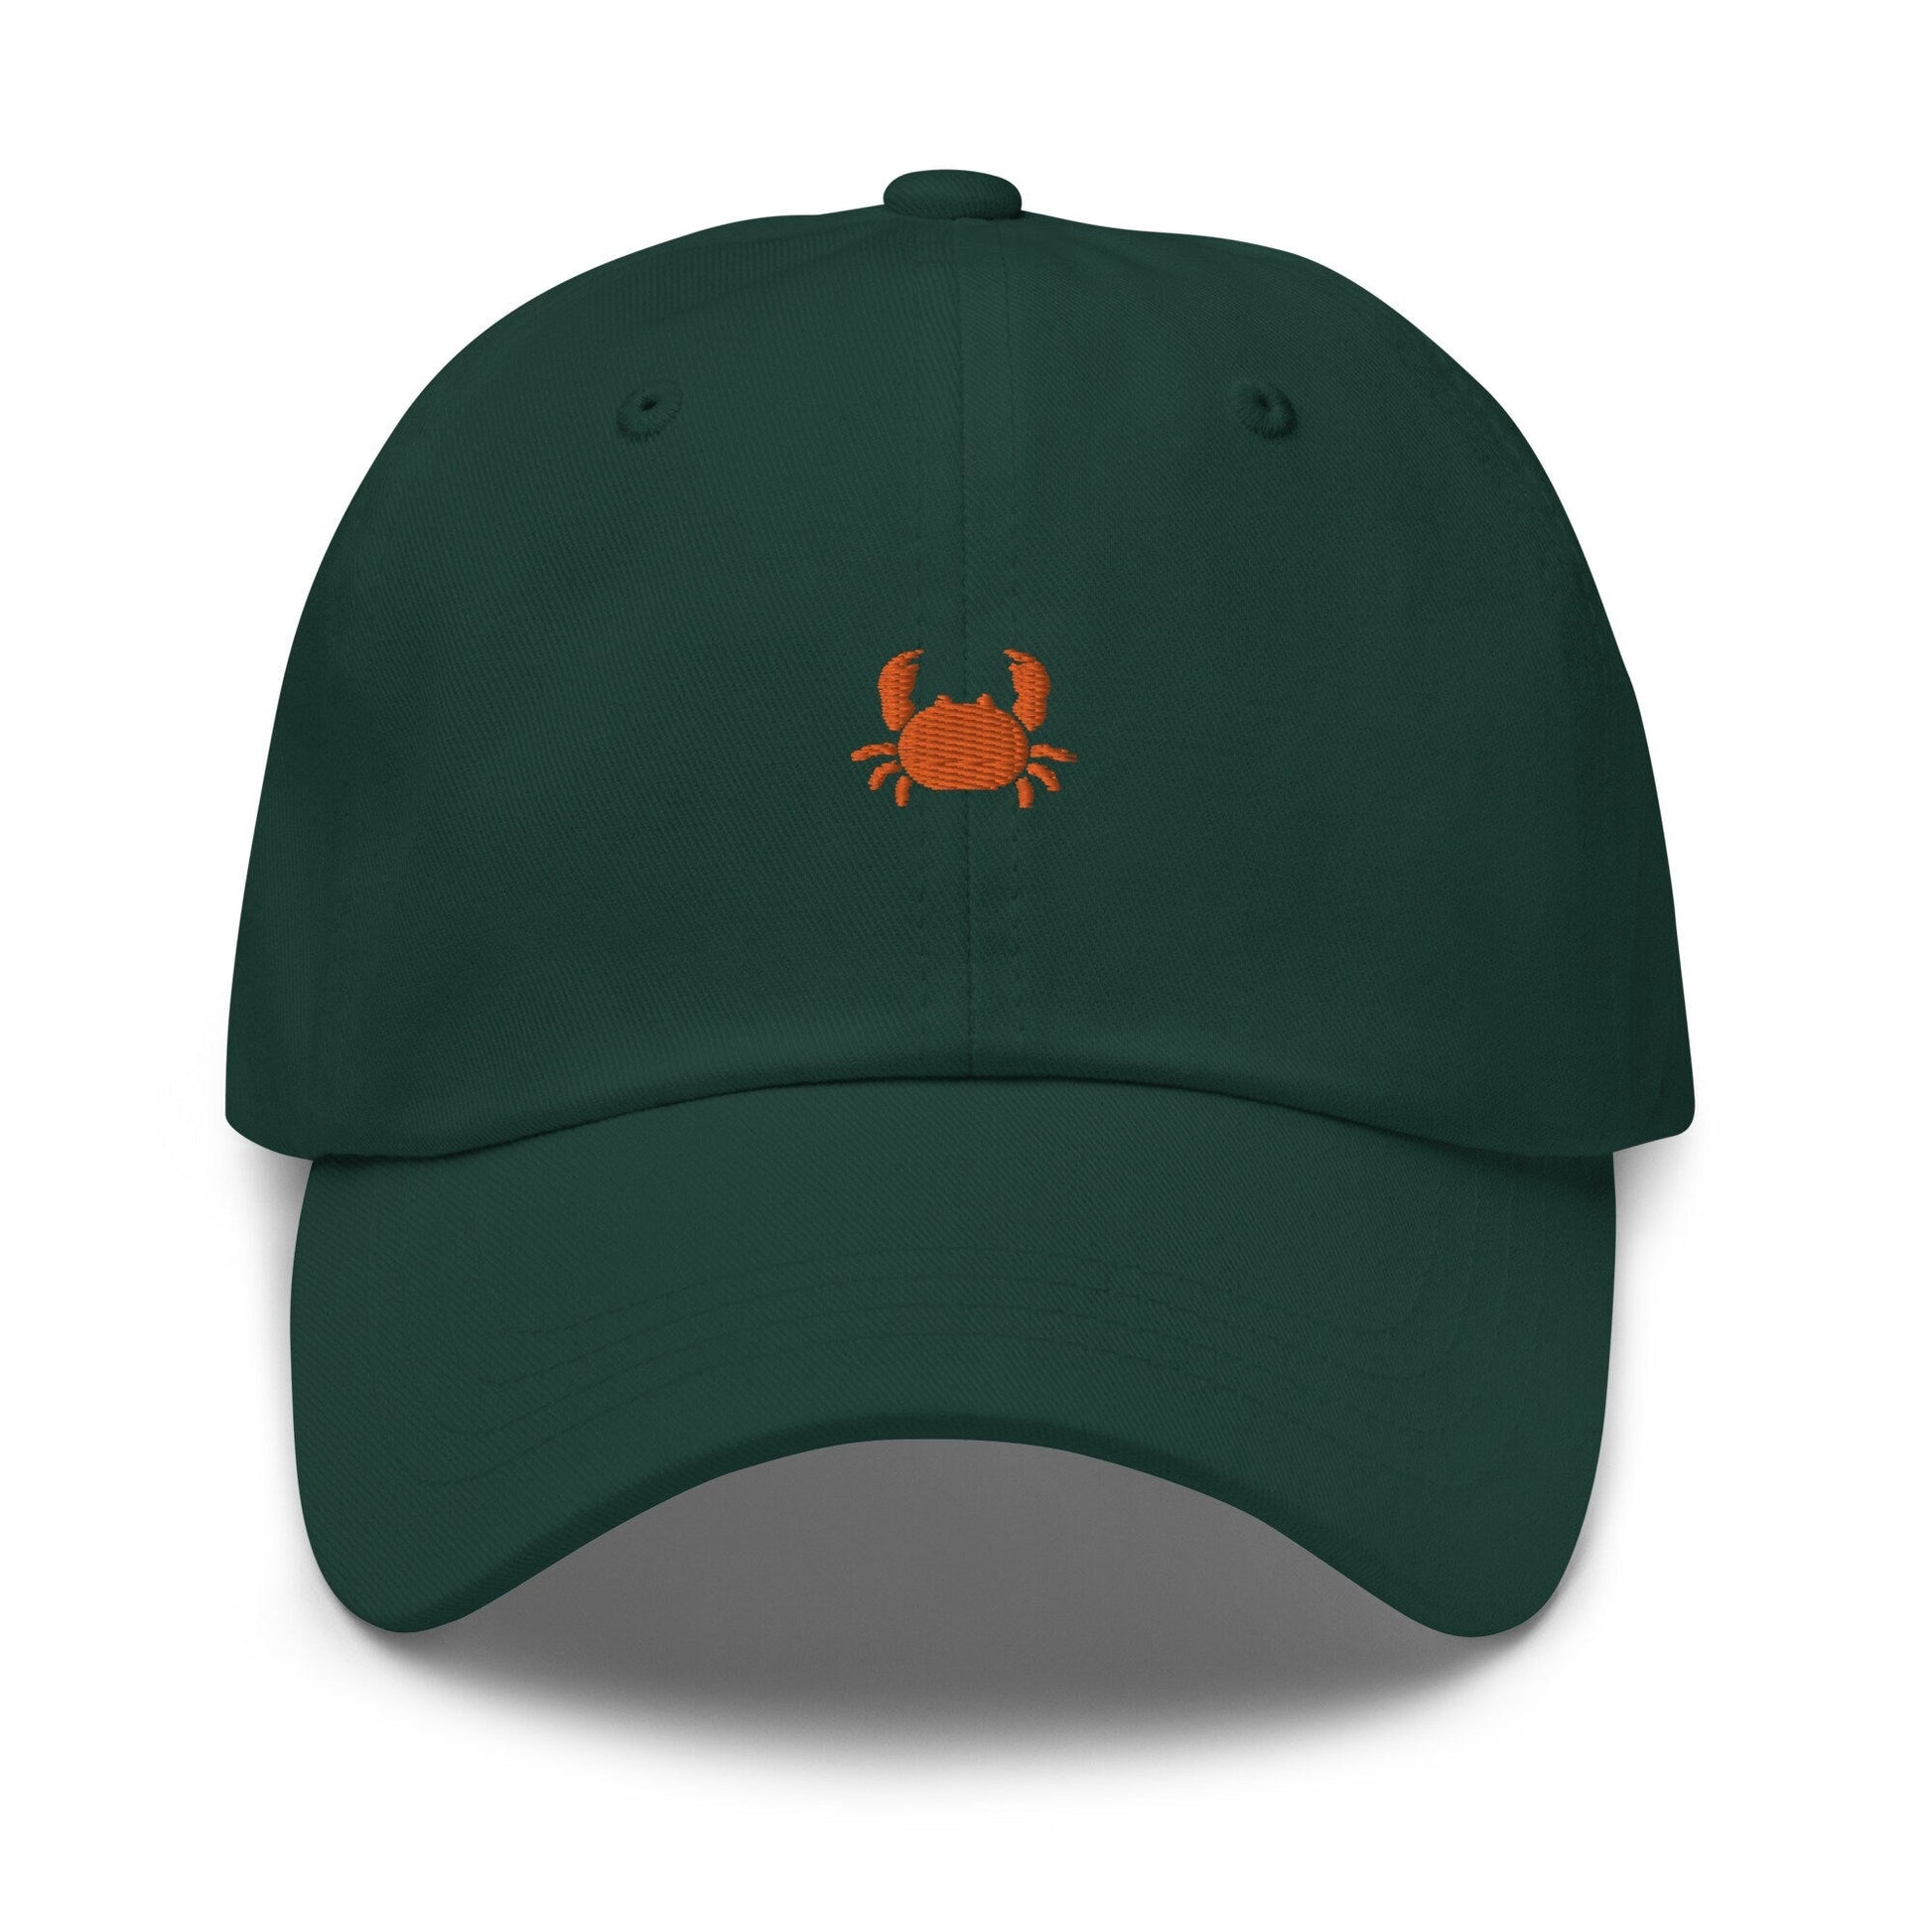 Crab Dad Hat - Cotton Embroidered Cap - Multiple Colors - Evilwater Originals